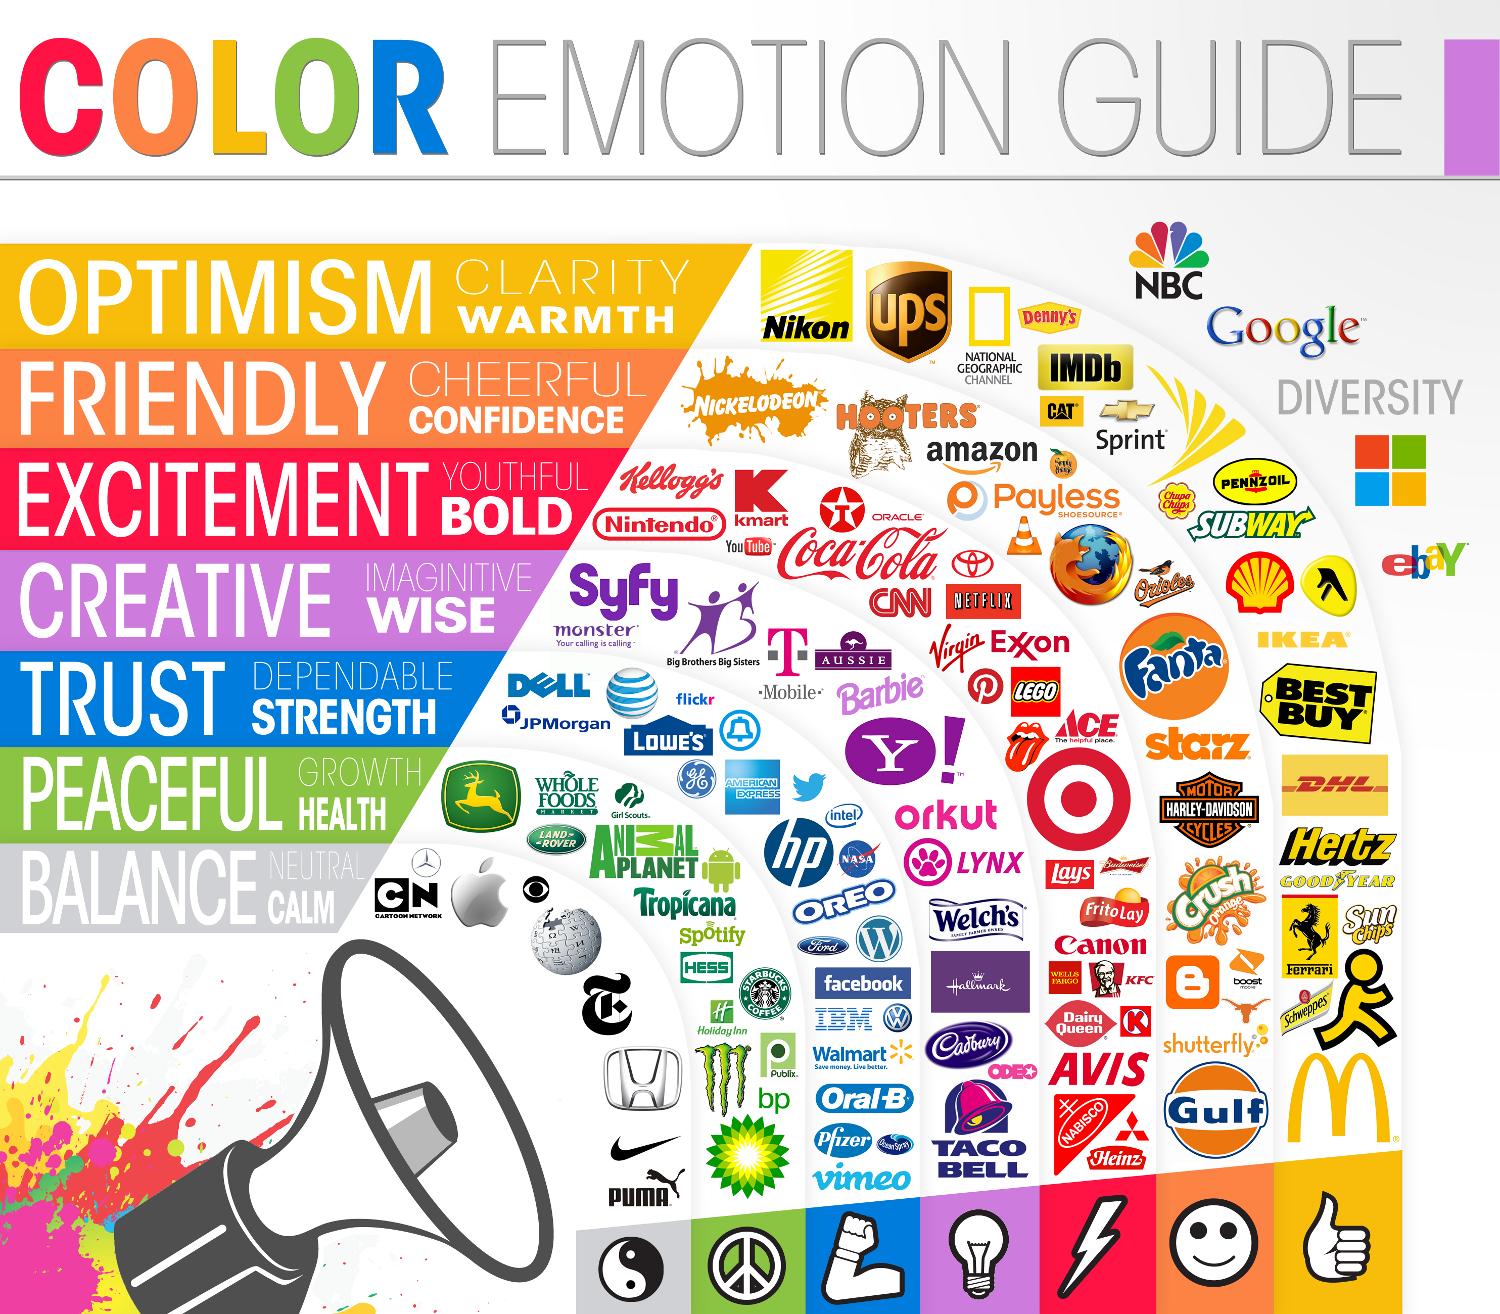 Color Emotion Guide for Brand Marketing